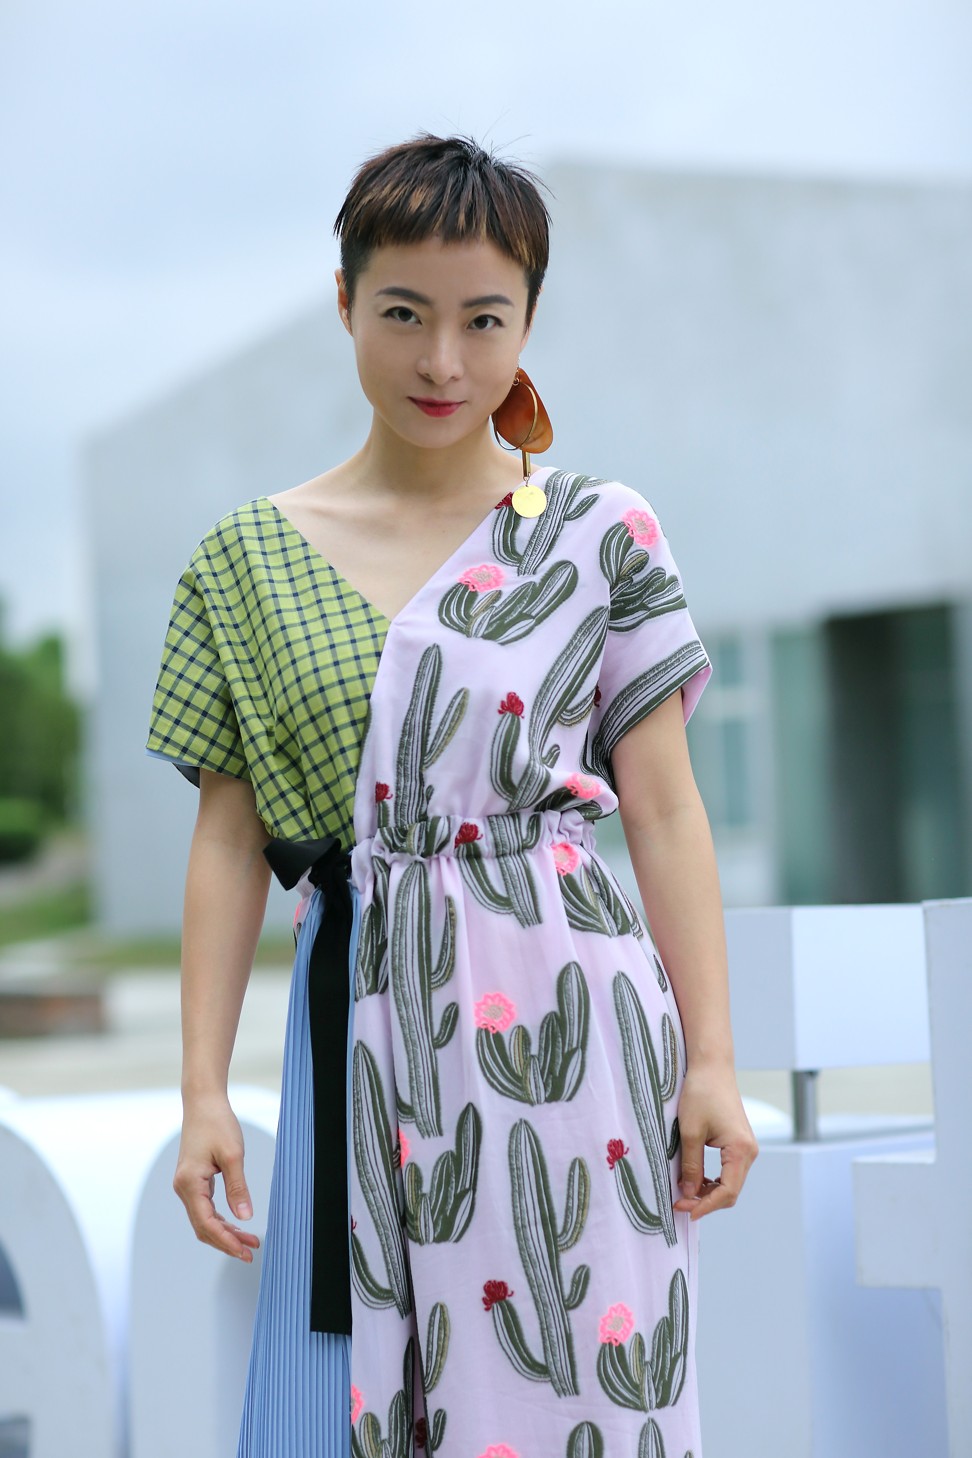 Beijing-based designer Alicia Lee originally studied English literature at university. Photo: Handout